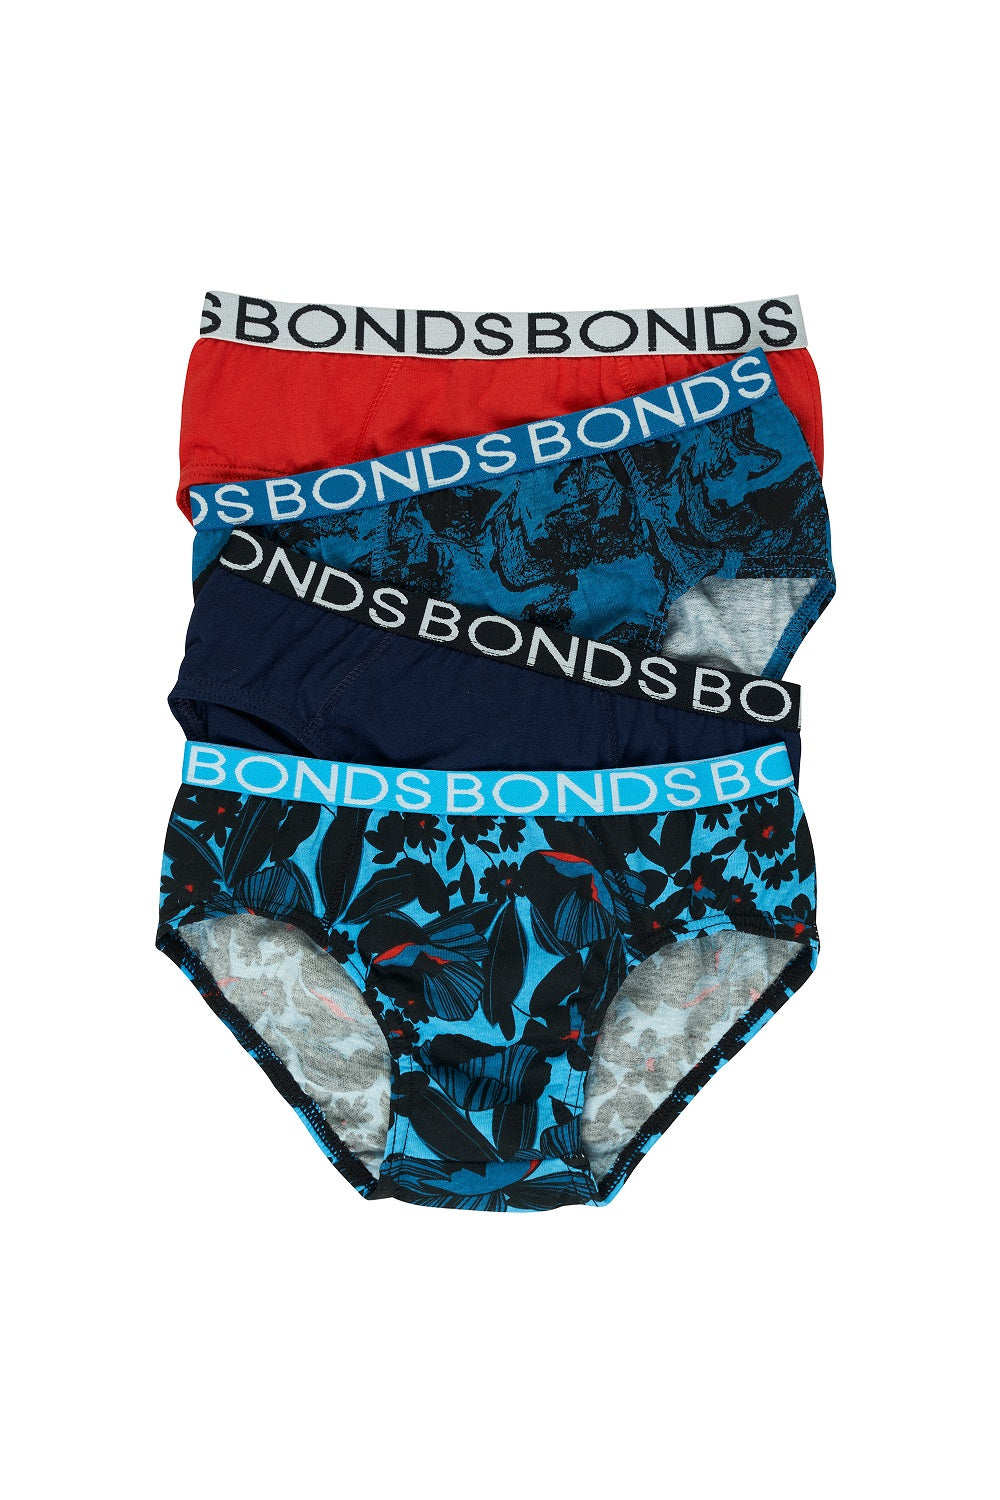 Bonds Boys 4 Pack Briefs - Dream On